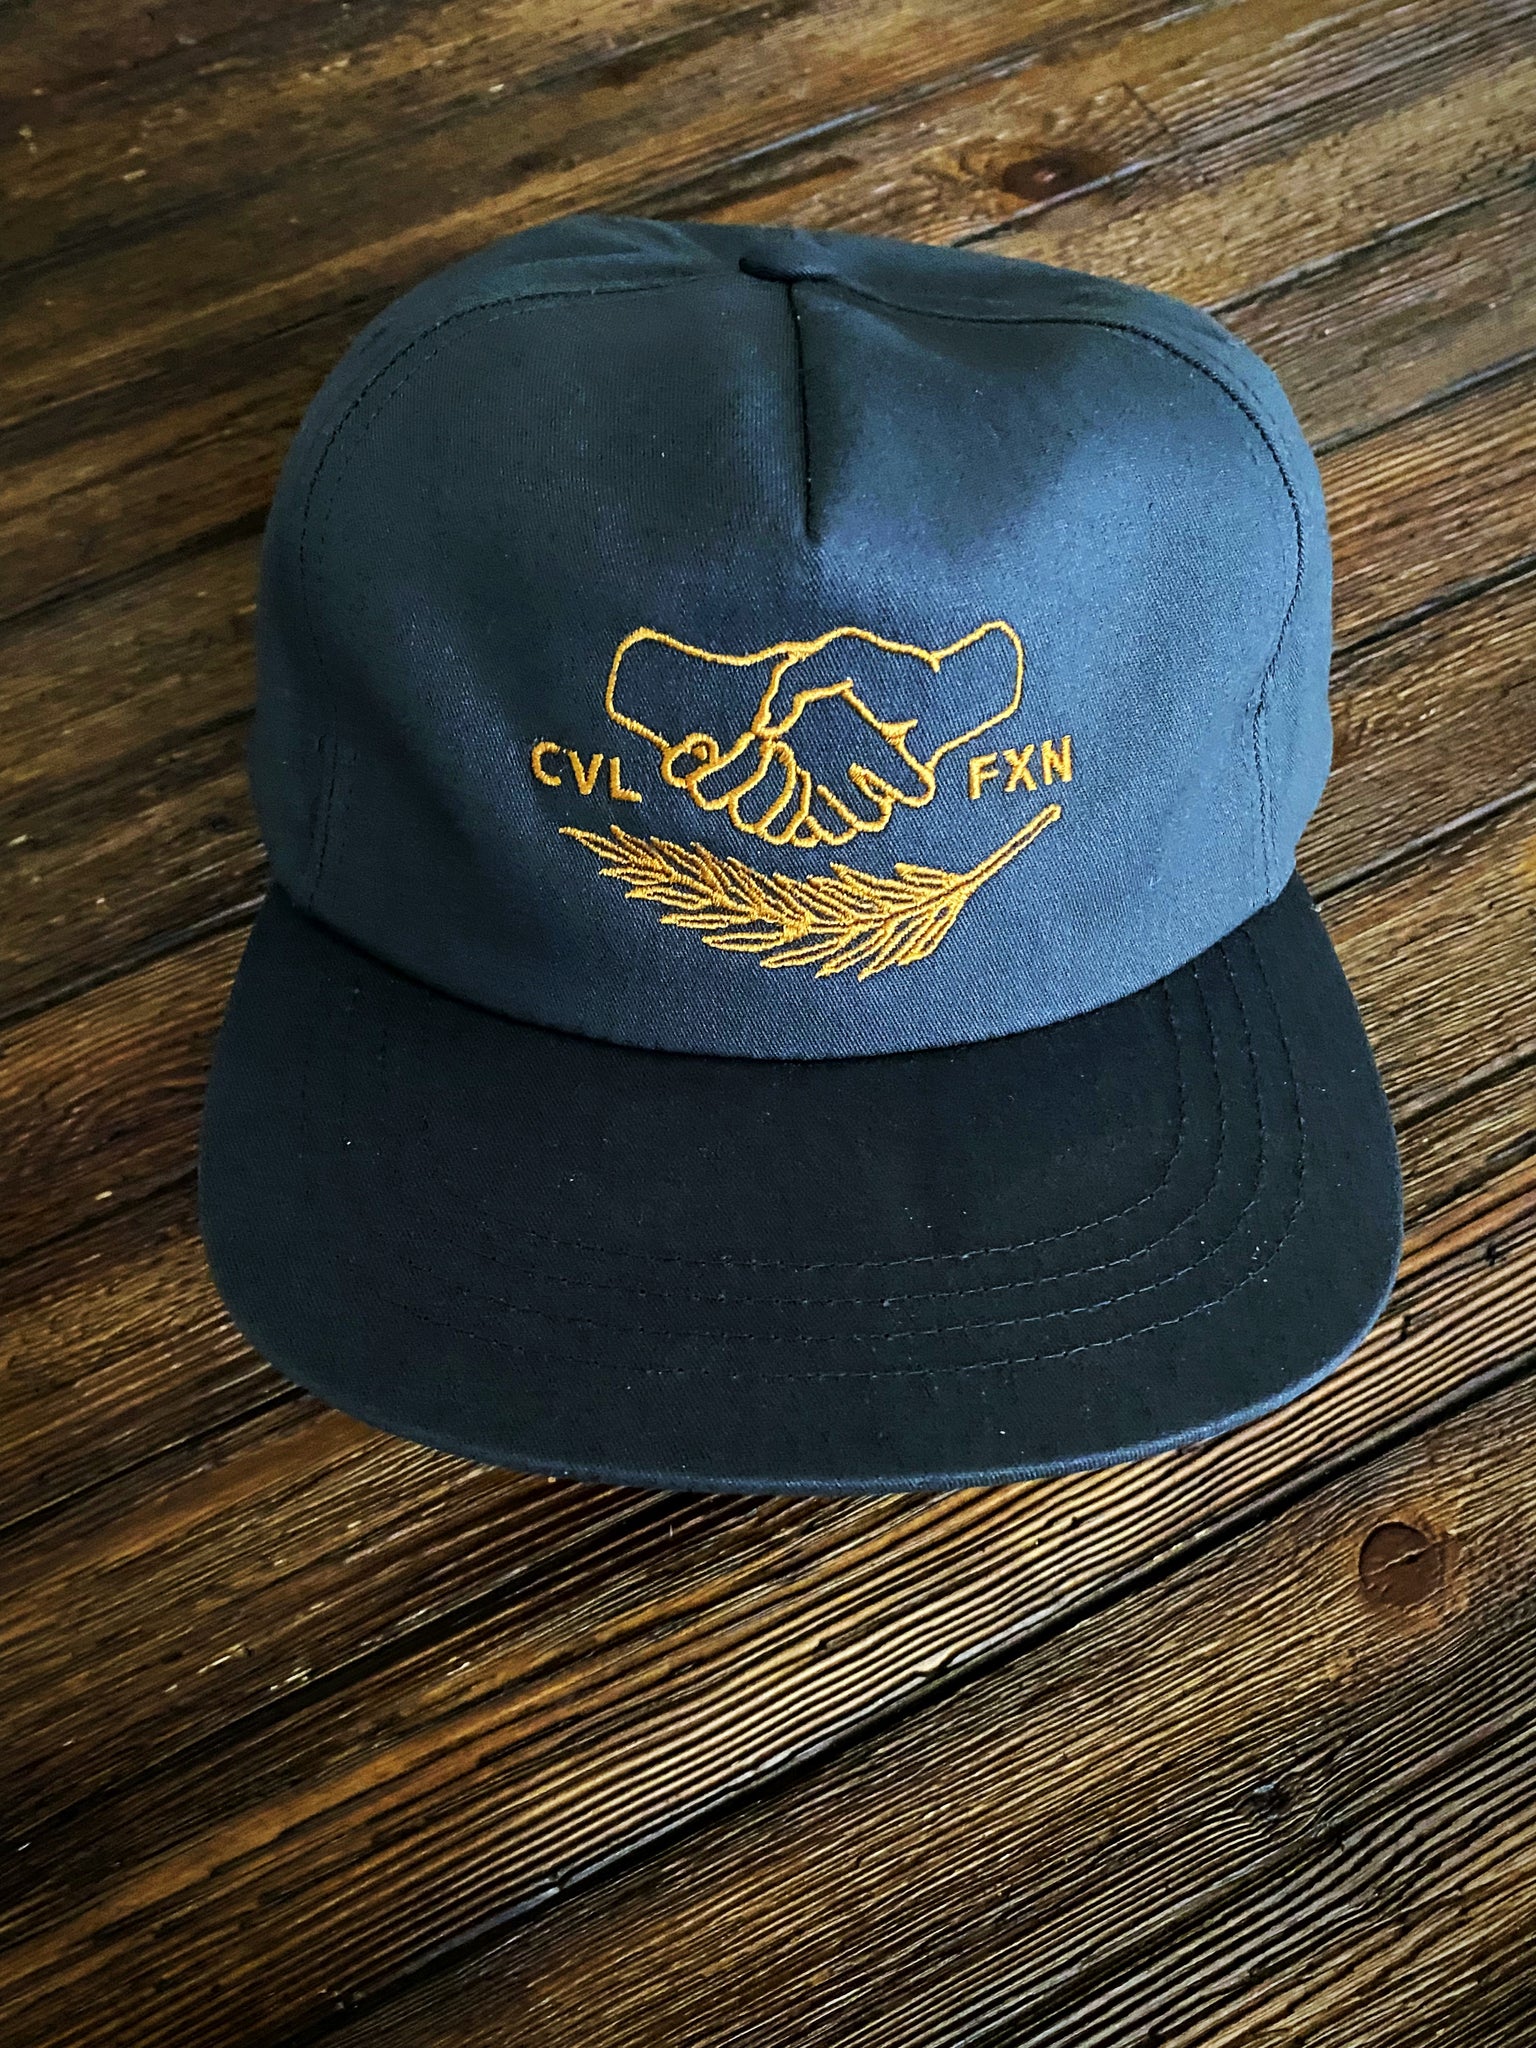 CVL FXN word is bond hat